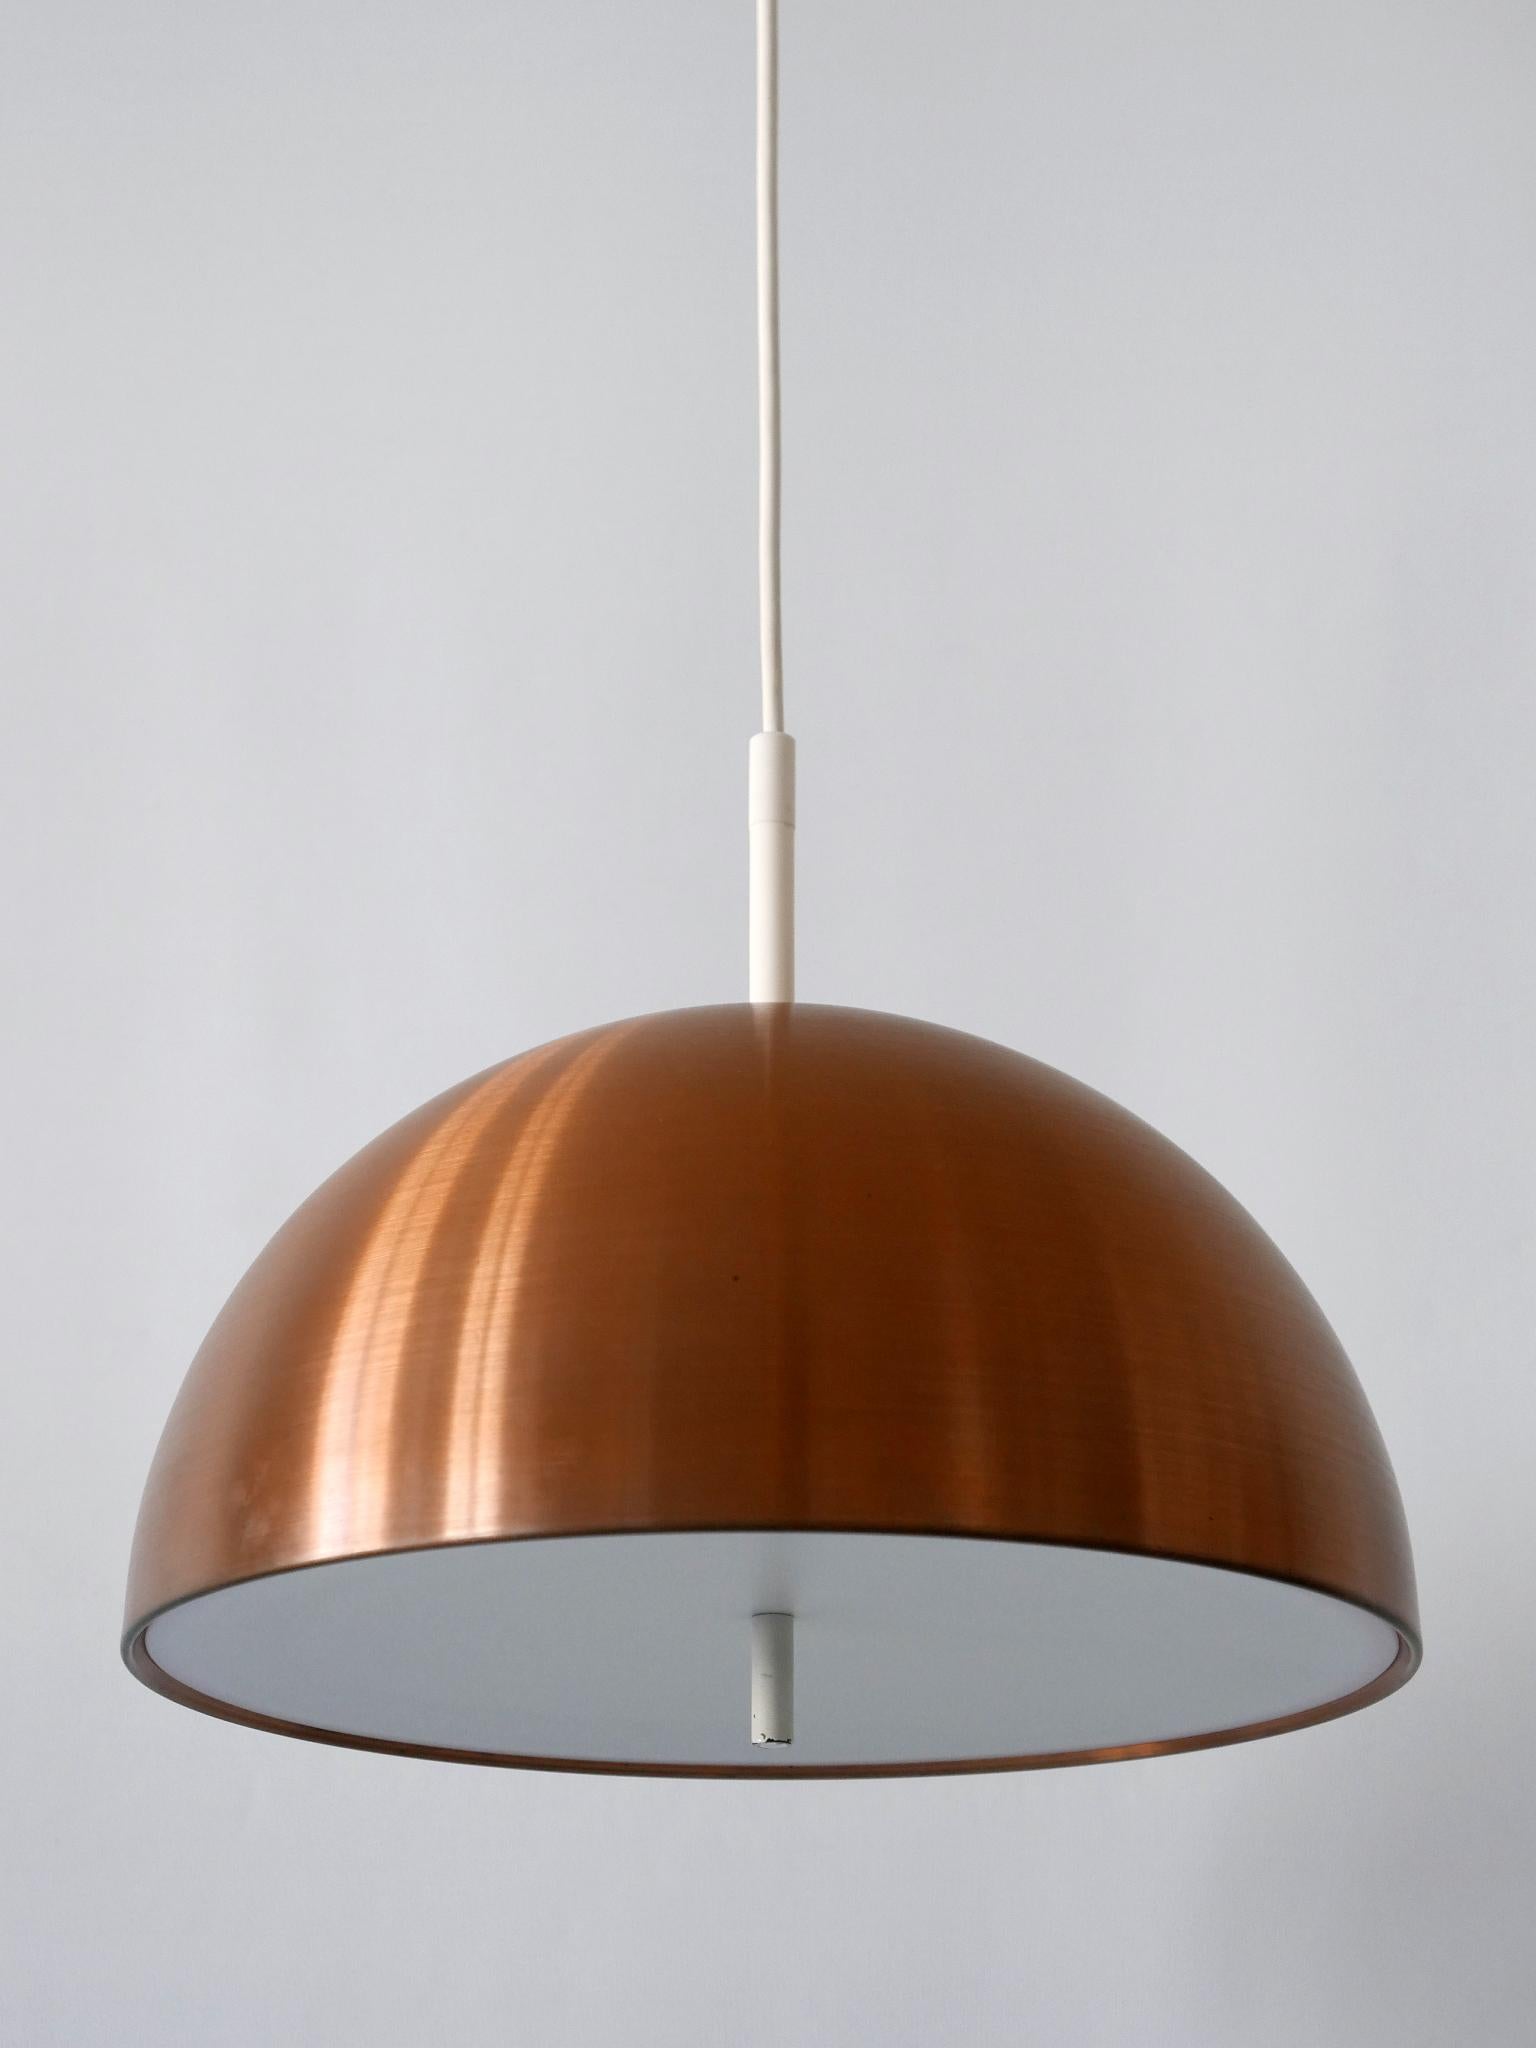 Elegant Mid-Century Modern Copper Pendant Lamp by Staff & Schwarz Germany, 1960s For Sale 12